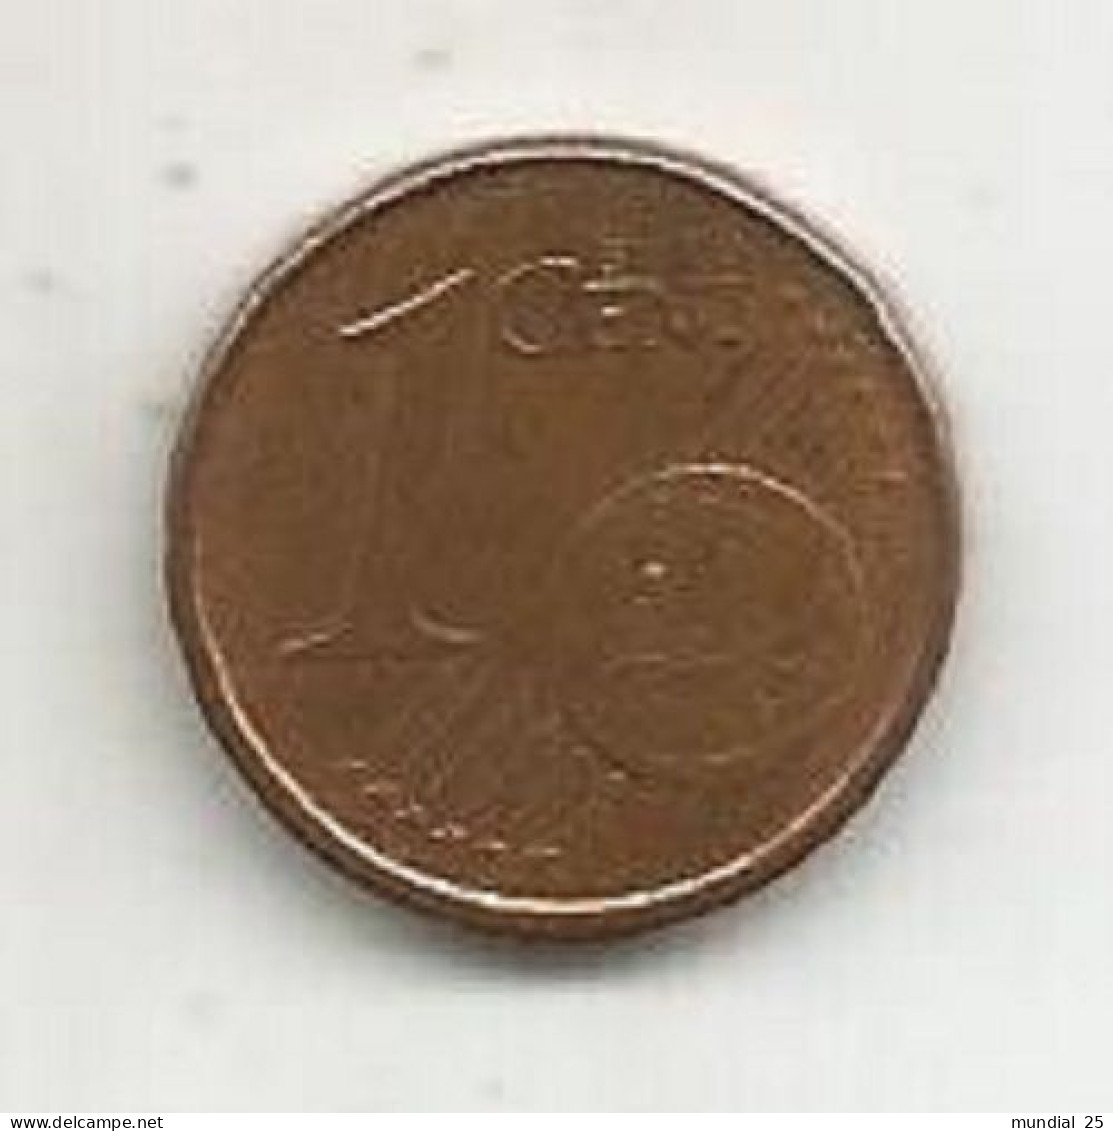 SPAIN 1 EURO CENT 2003 - Spain